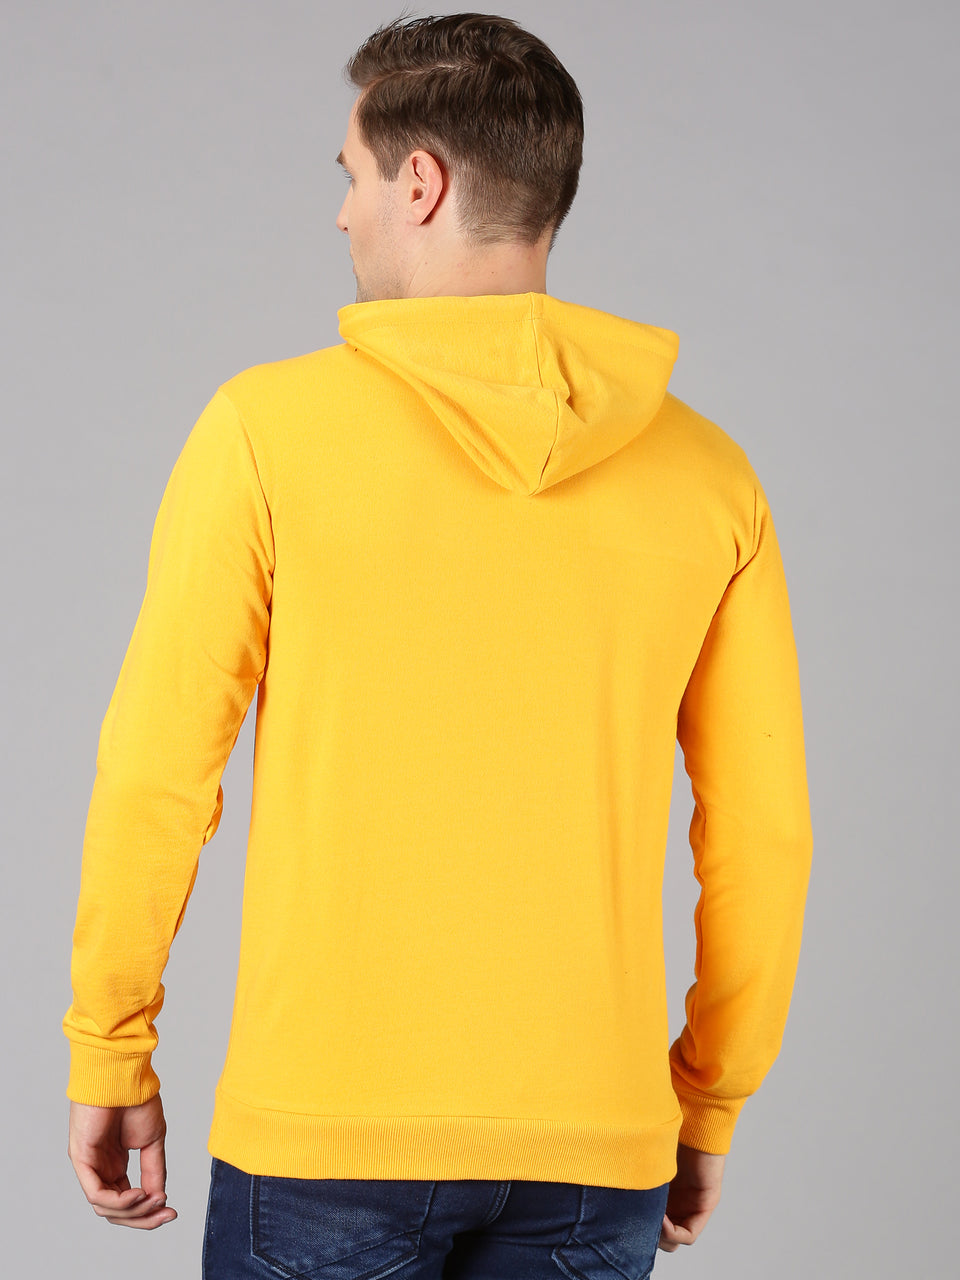 Men Yellow Black White Printed Hooded Neck Full Sleeve Casual Pullover Hoodies Sweatshirt